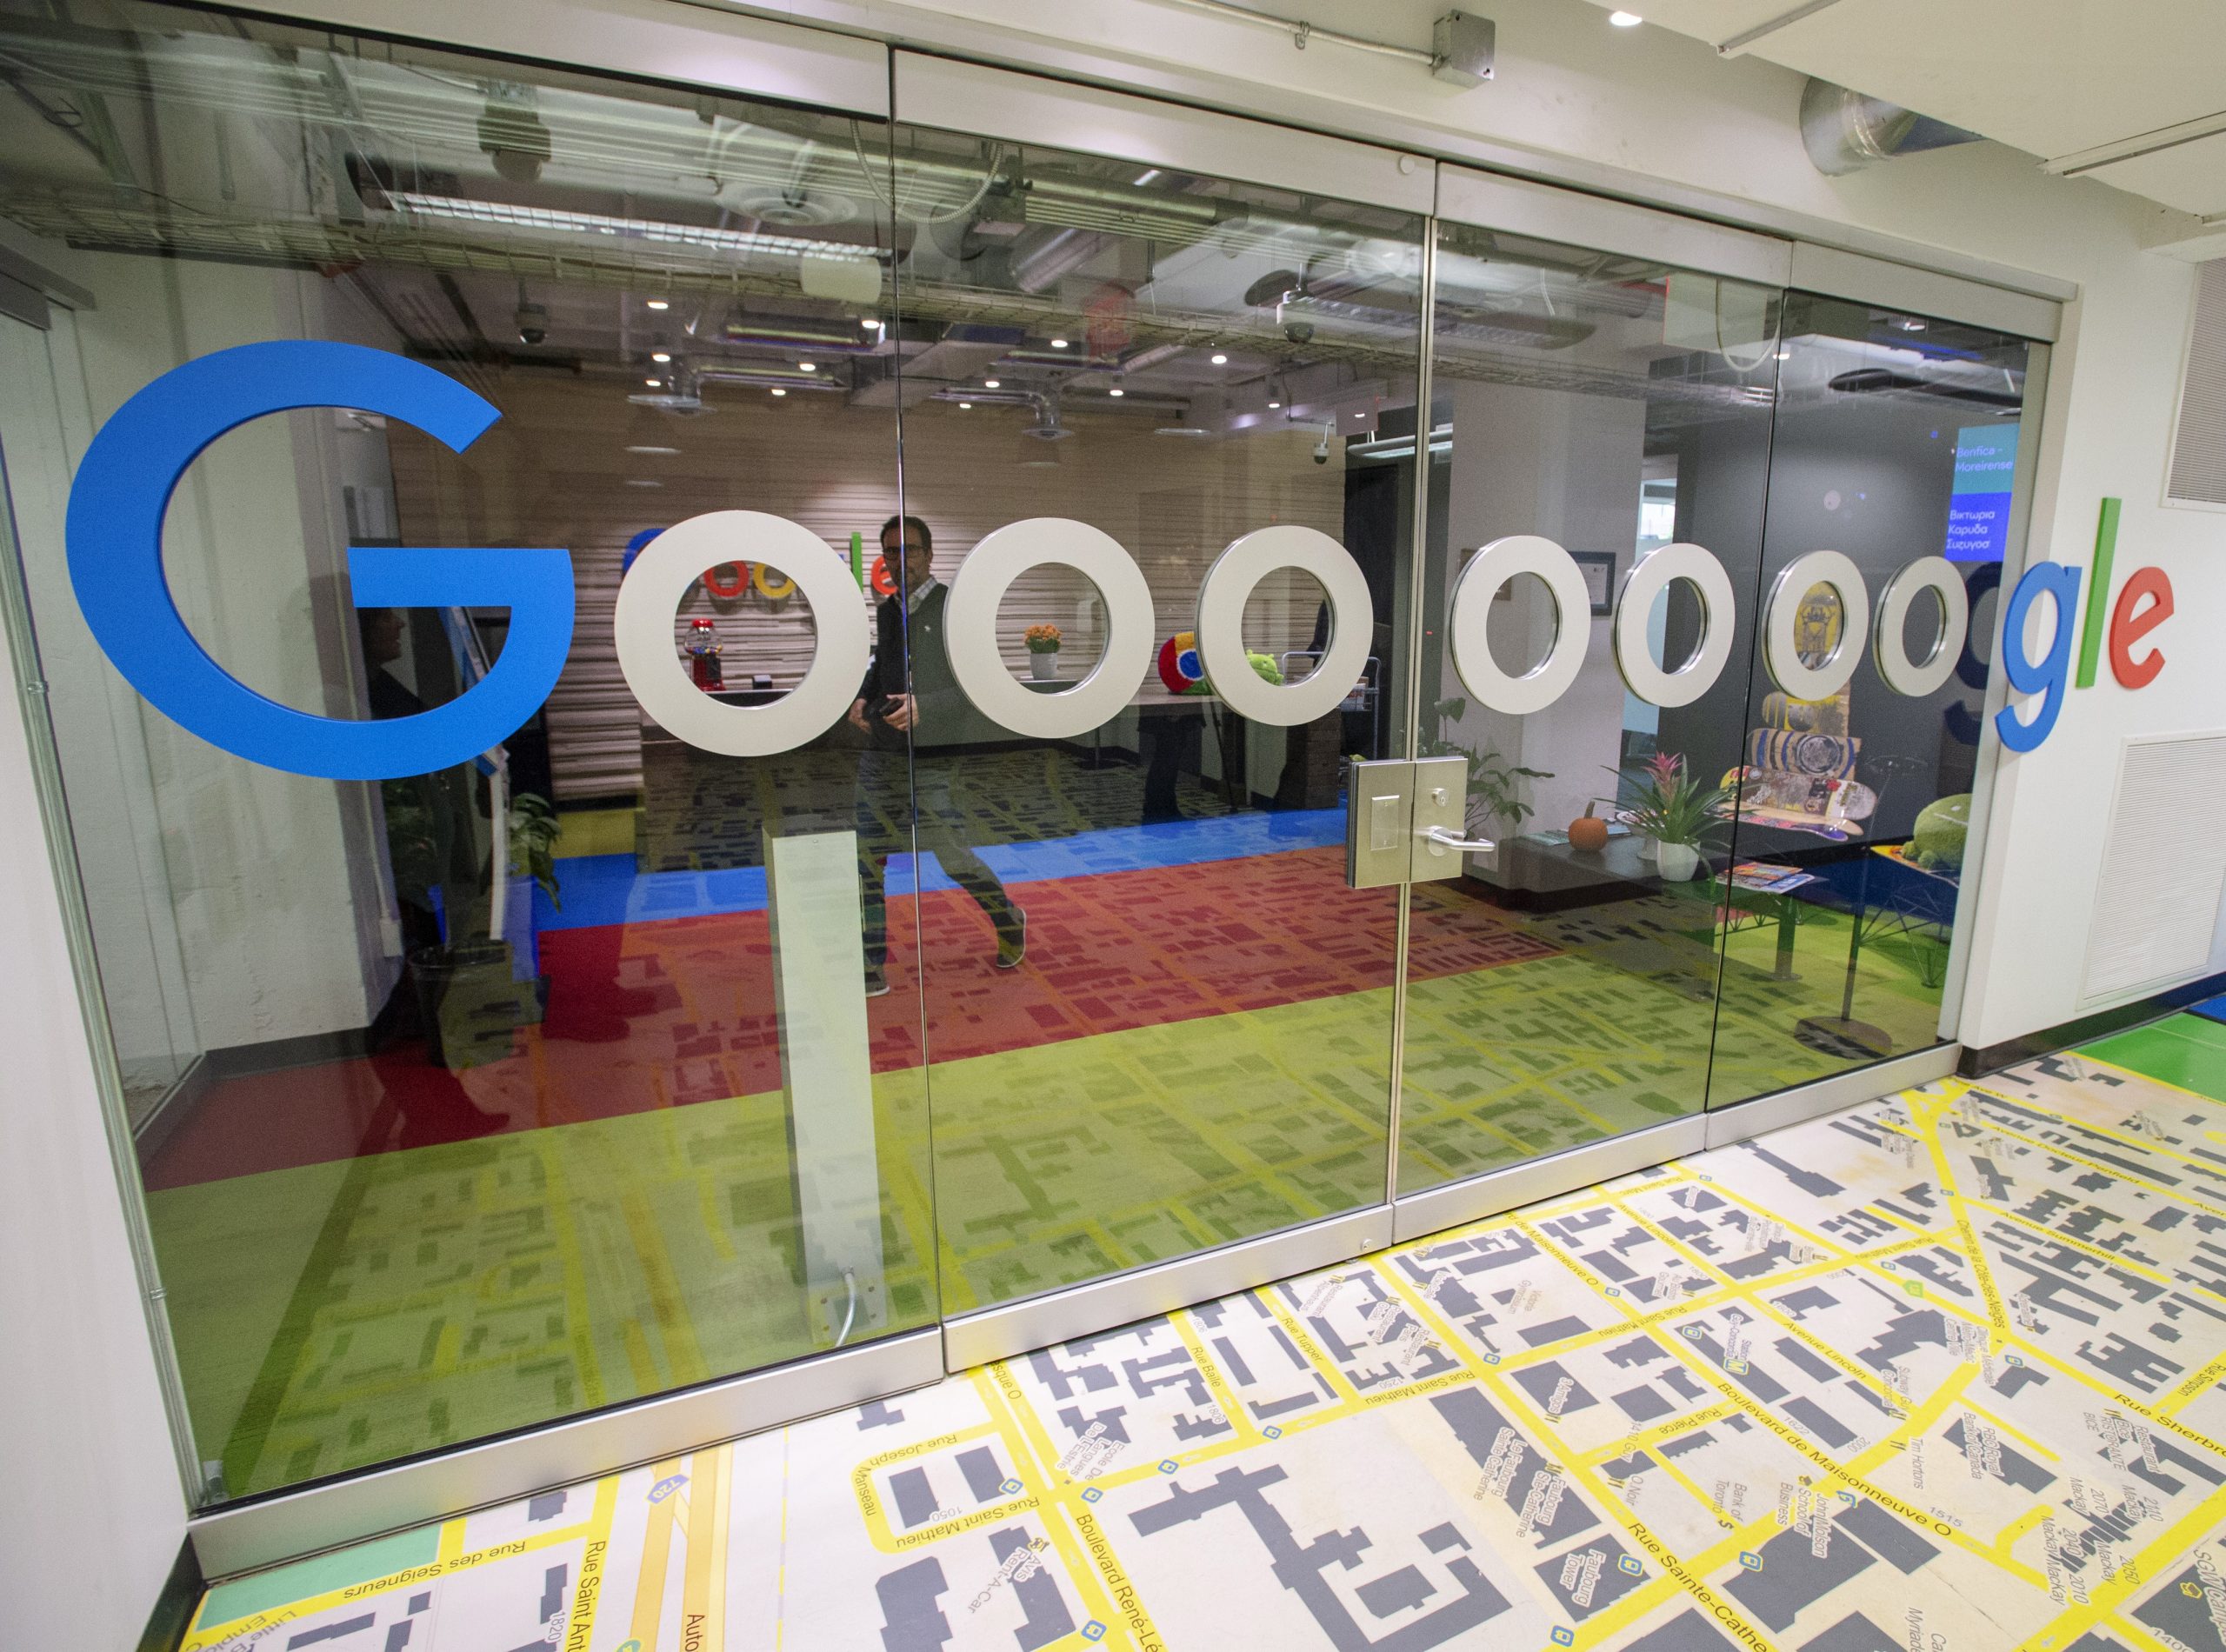 Google office with the glass decorated with the word Gooooooogle